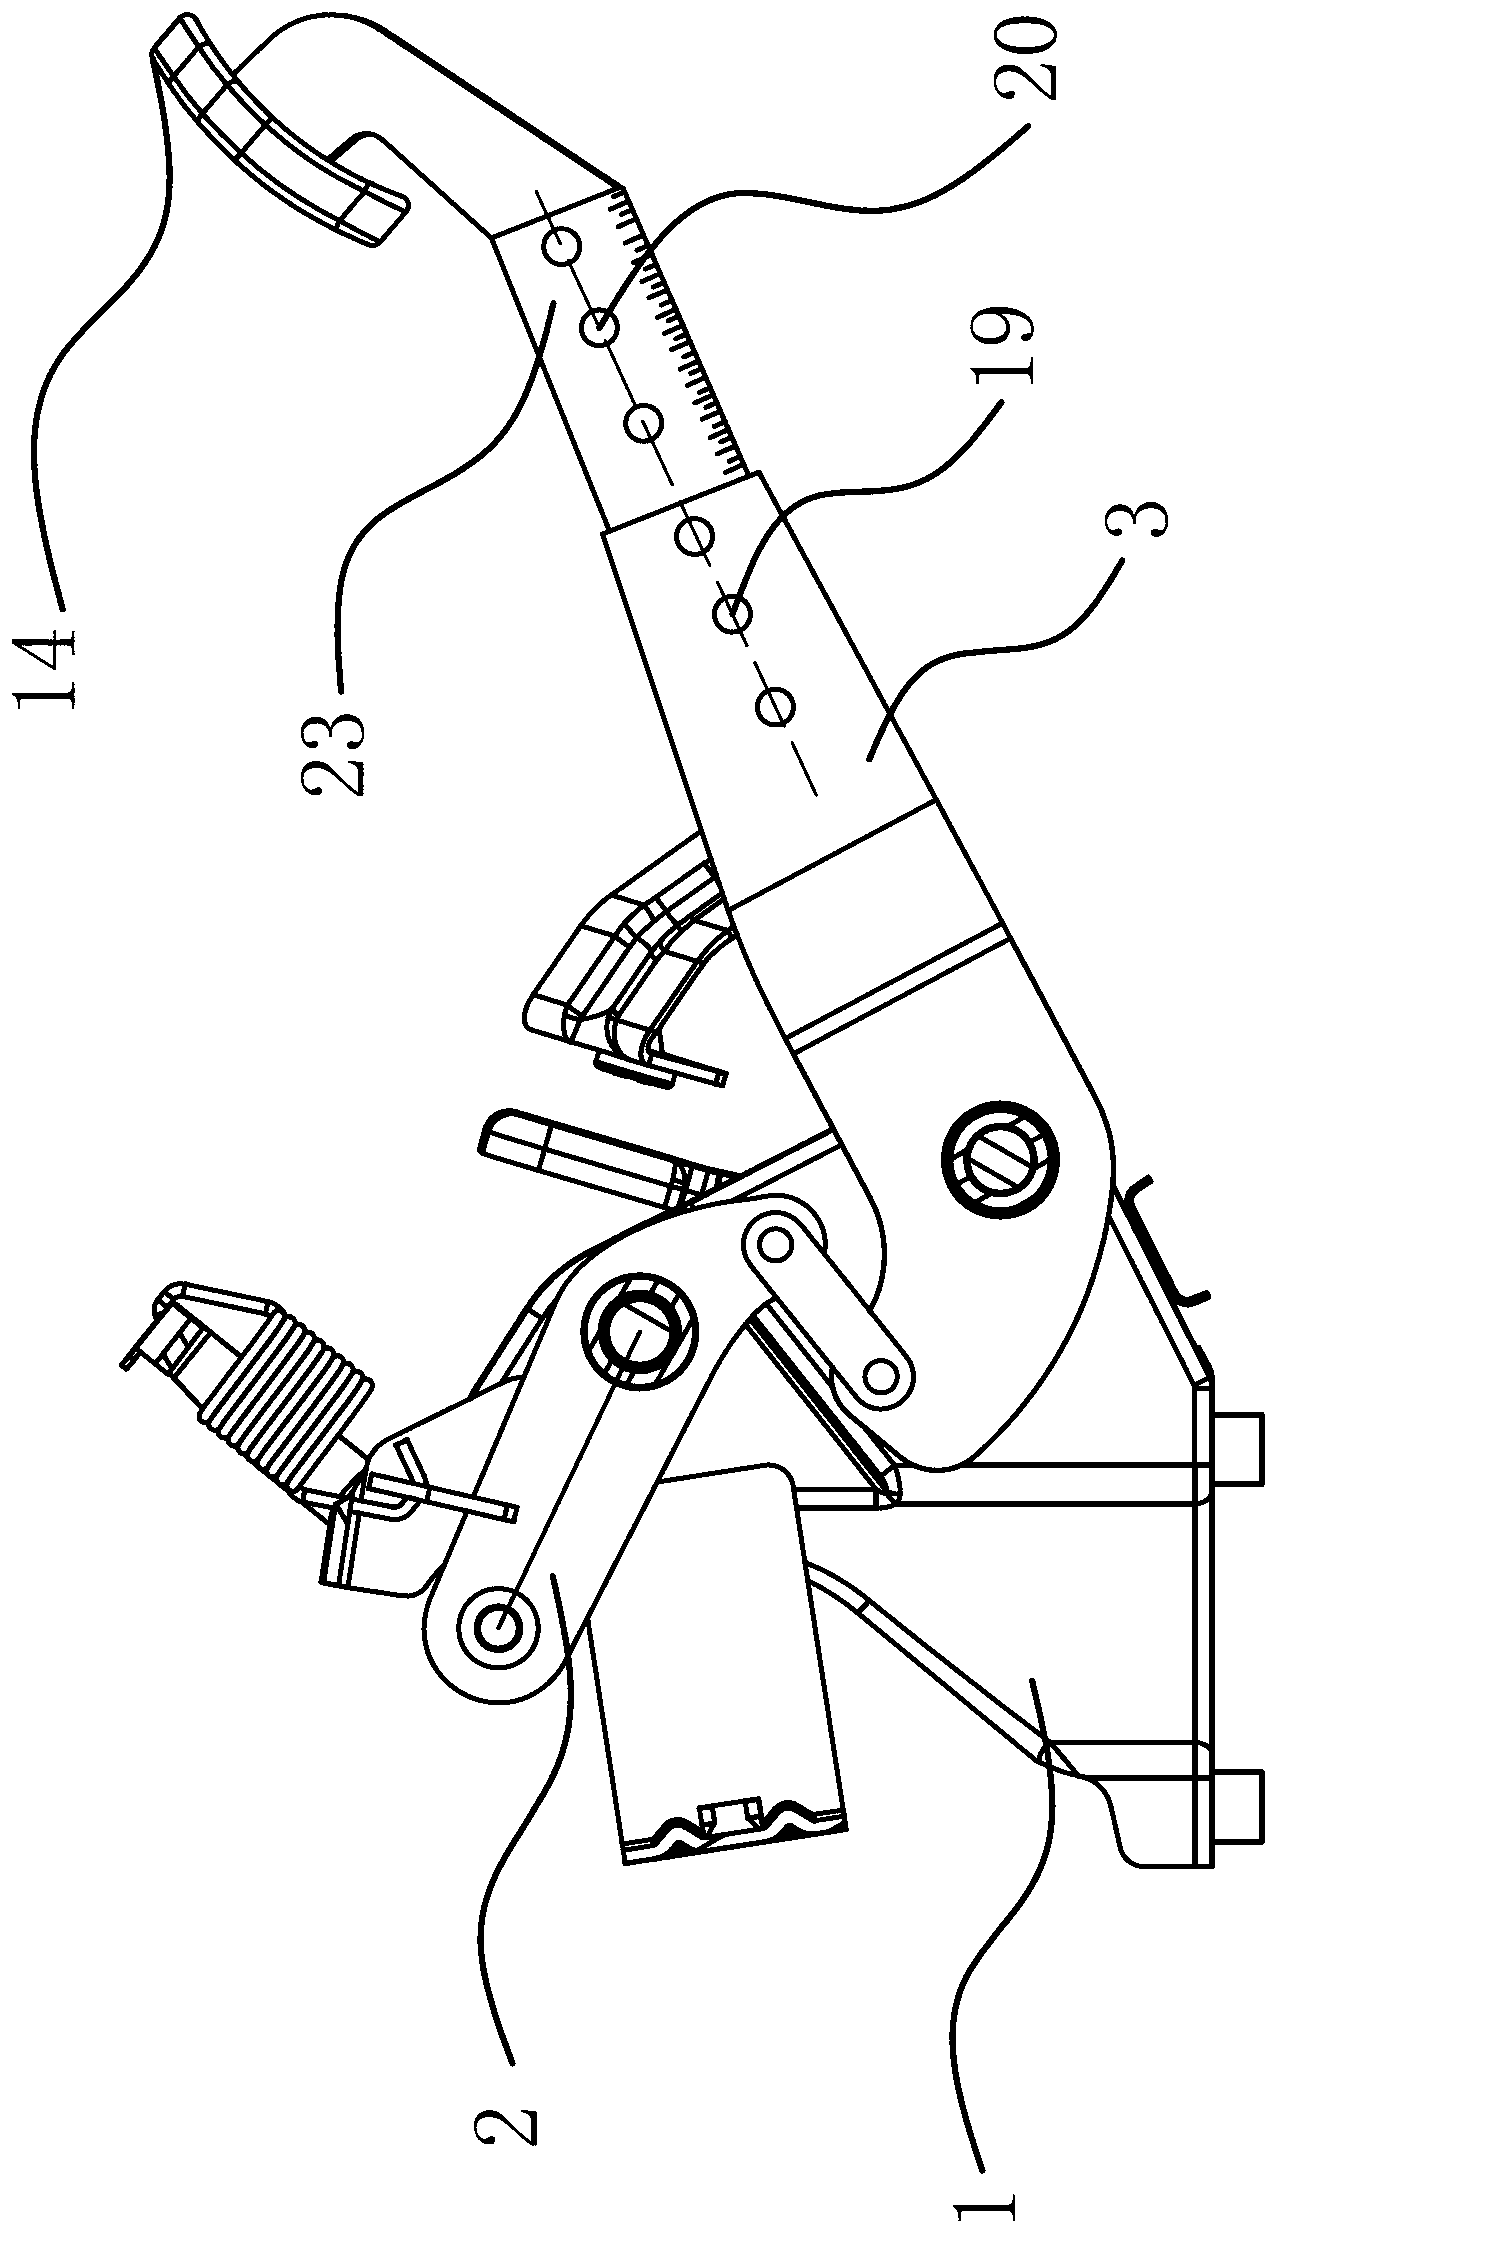 Automobile brake pedal component